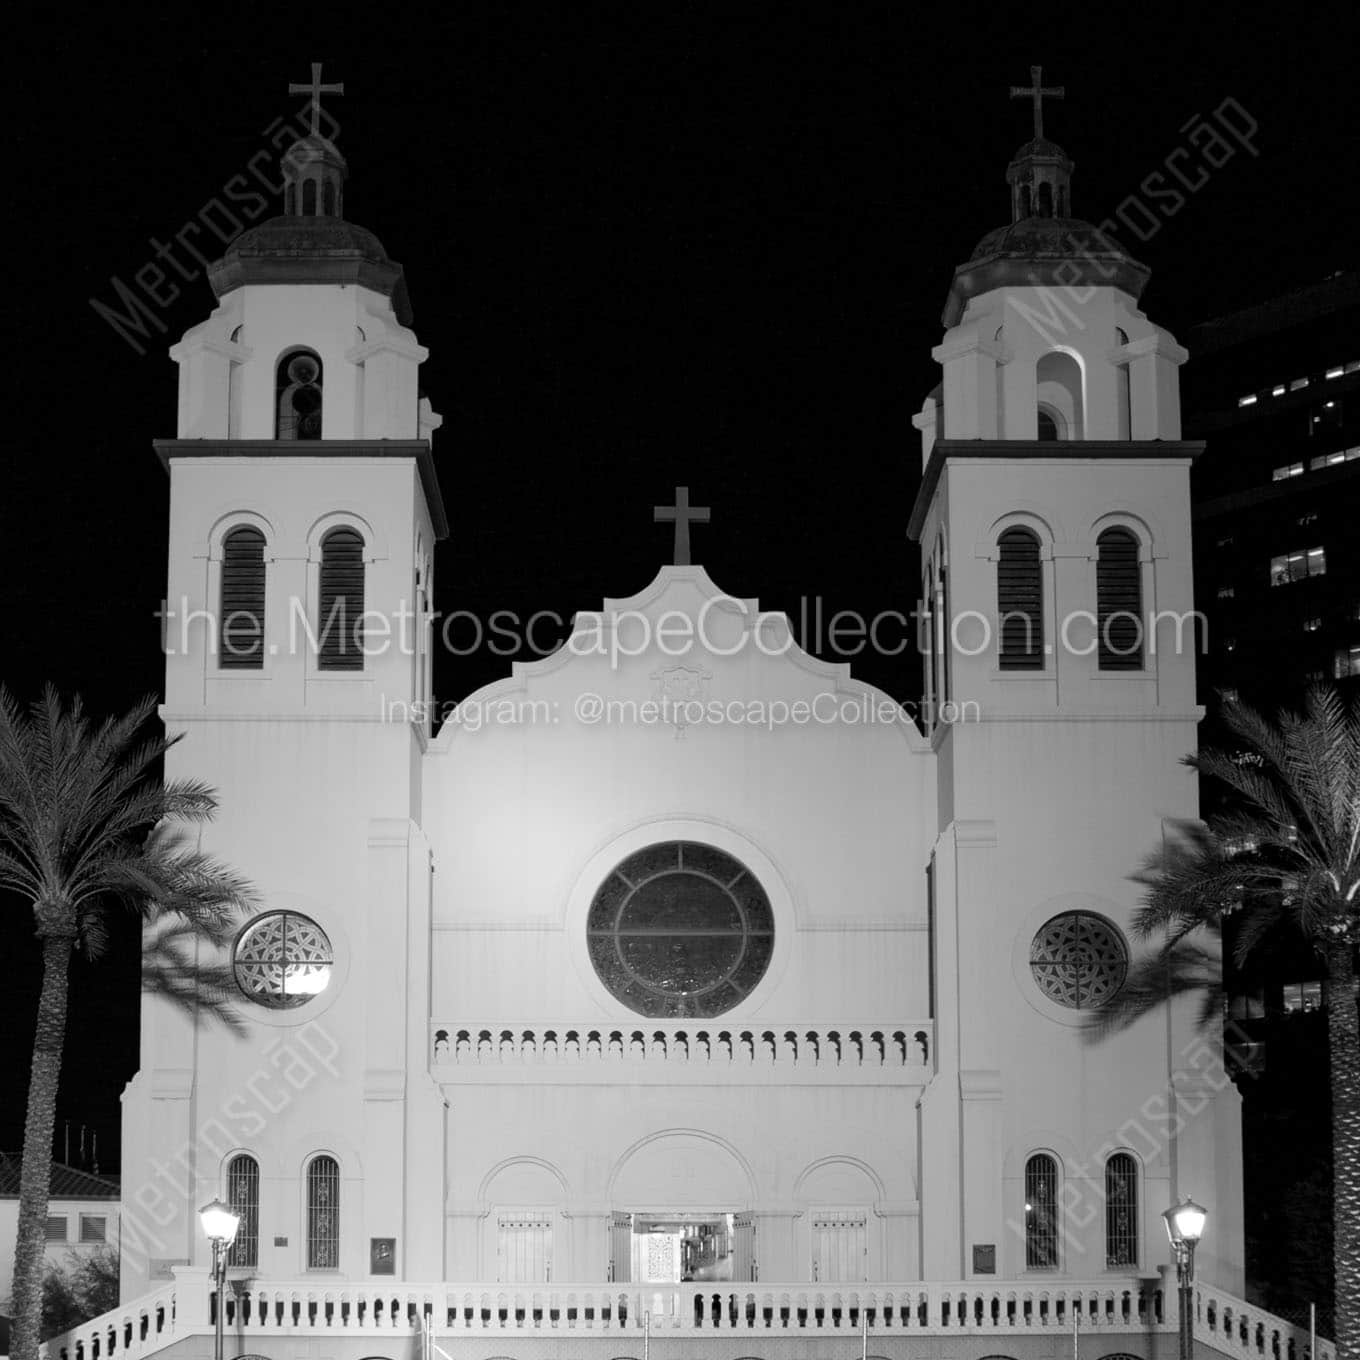 phoenix st marys basilica at night Black & White Office Art